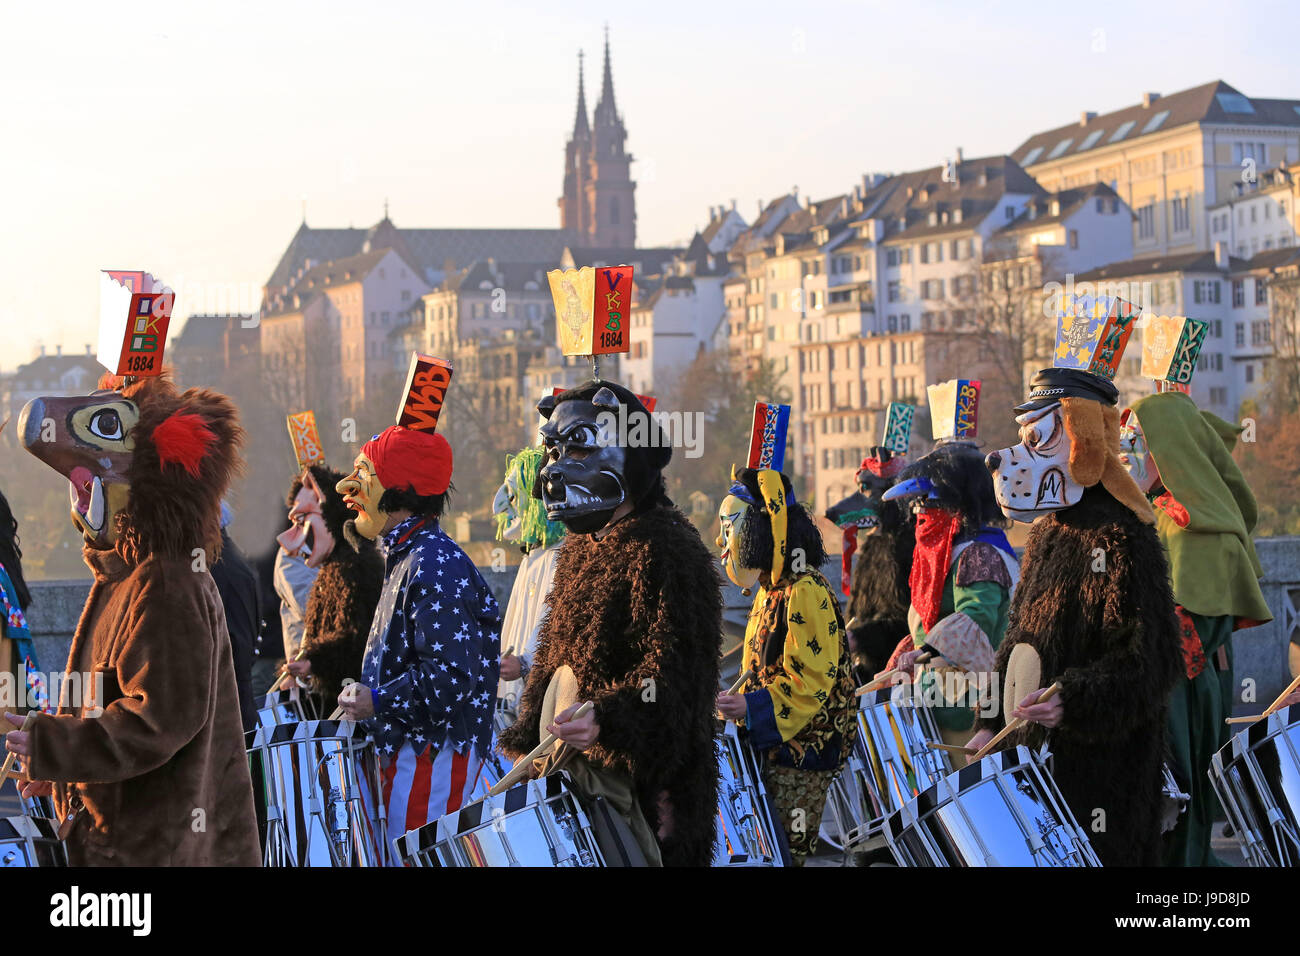 Karneval von Basel (Basler Fasnacht), Basel, Kanton Basel Stadt, Schweiz,  Europa Stockfotografie - Alamy